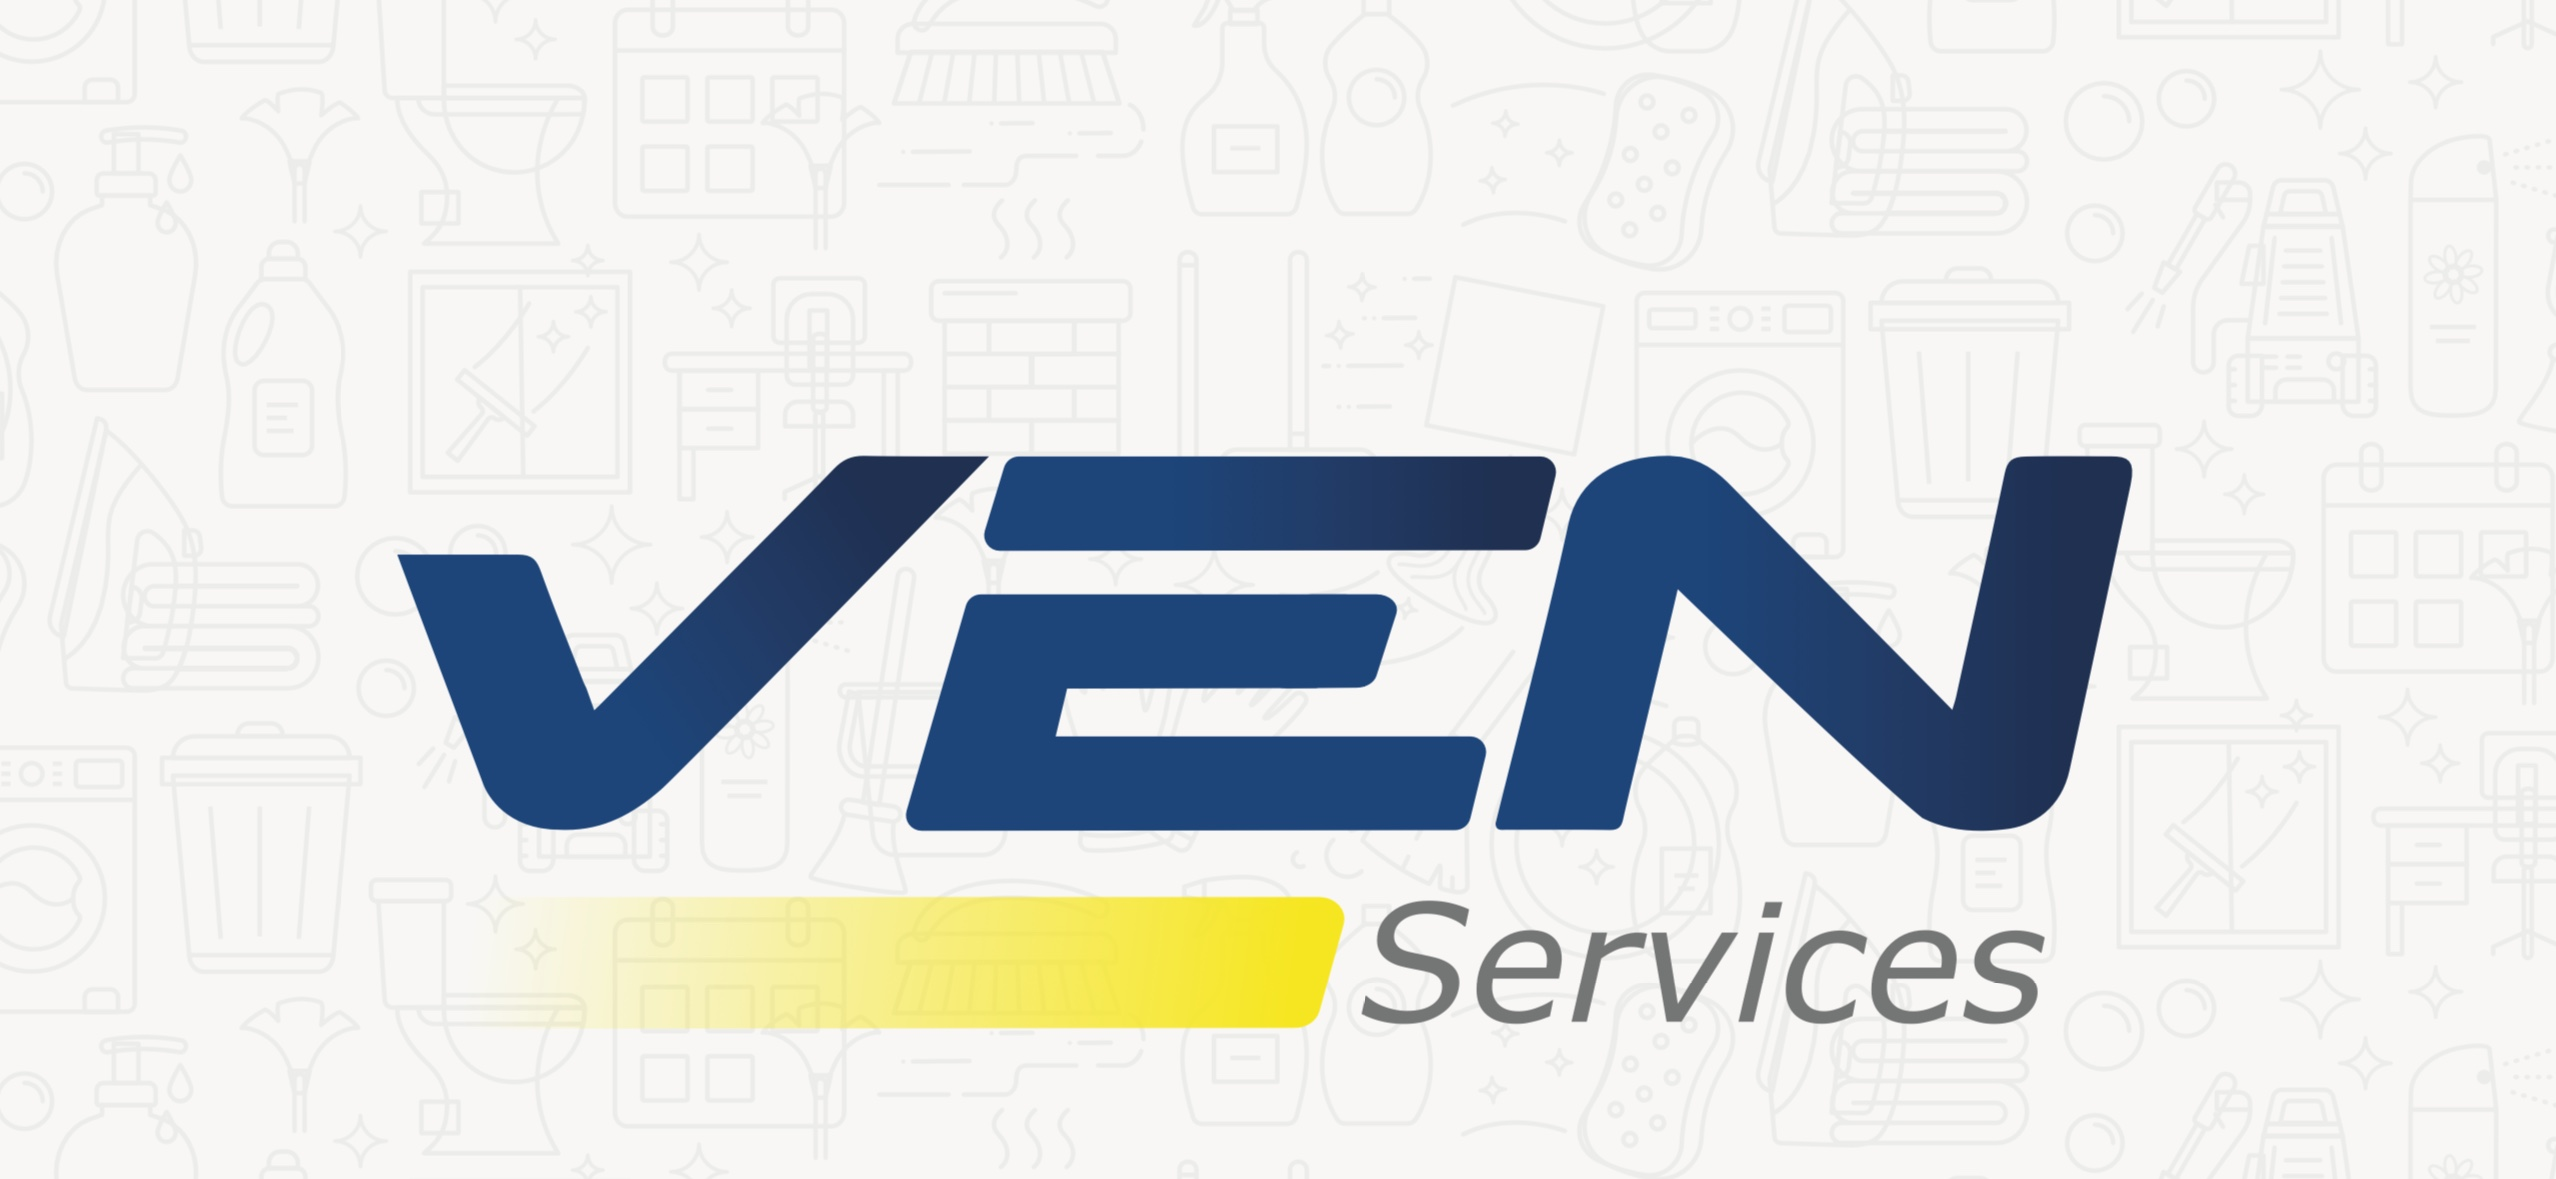 Ven Services's logo